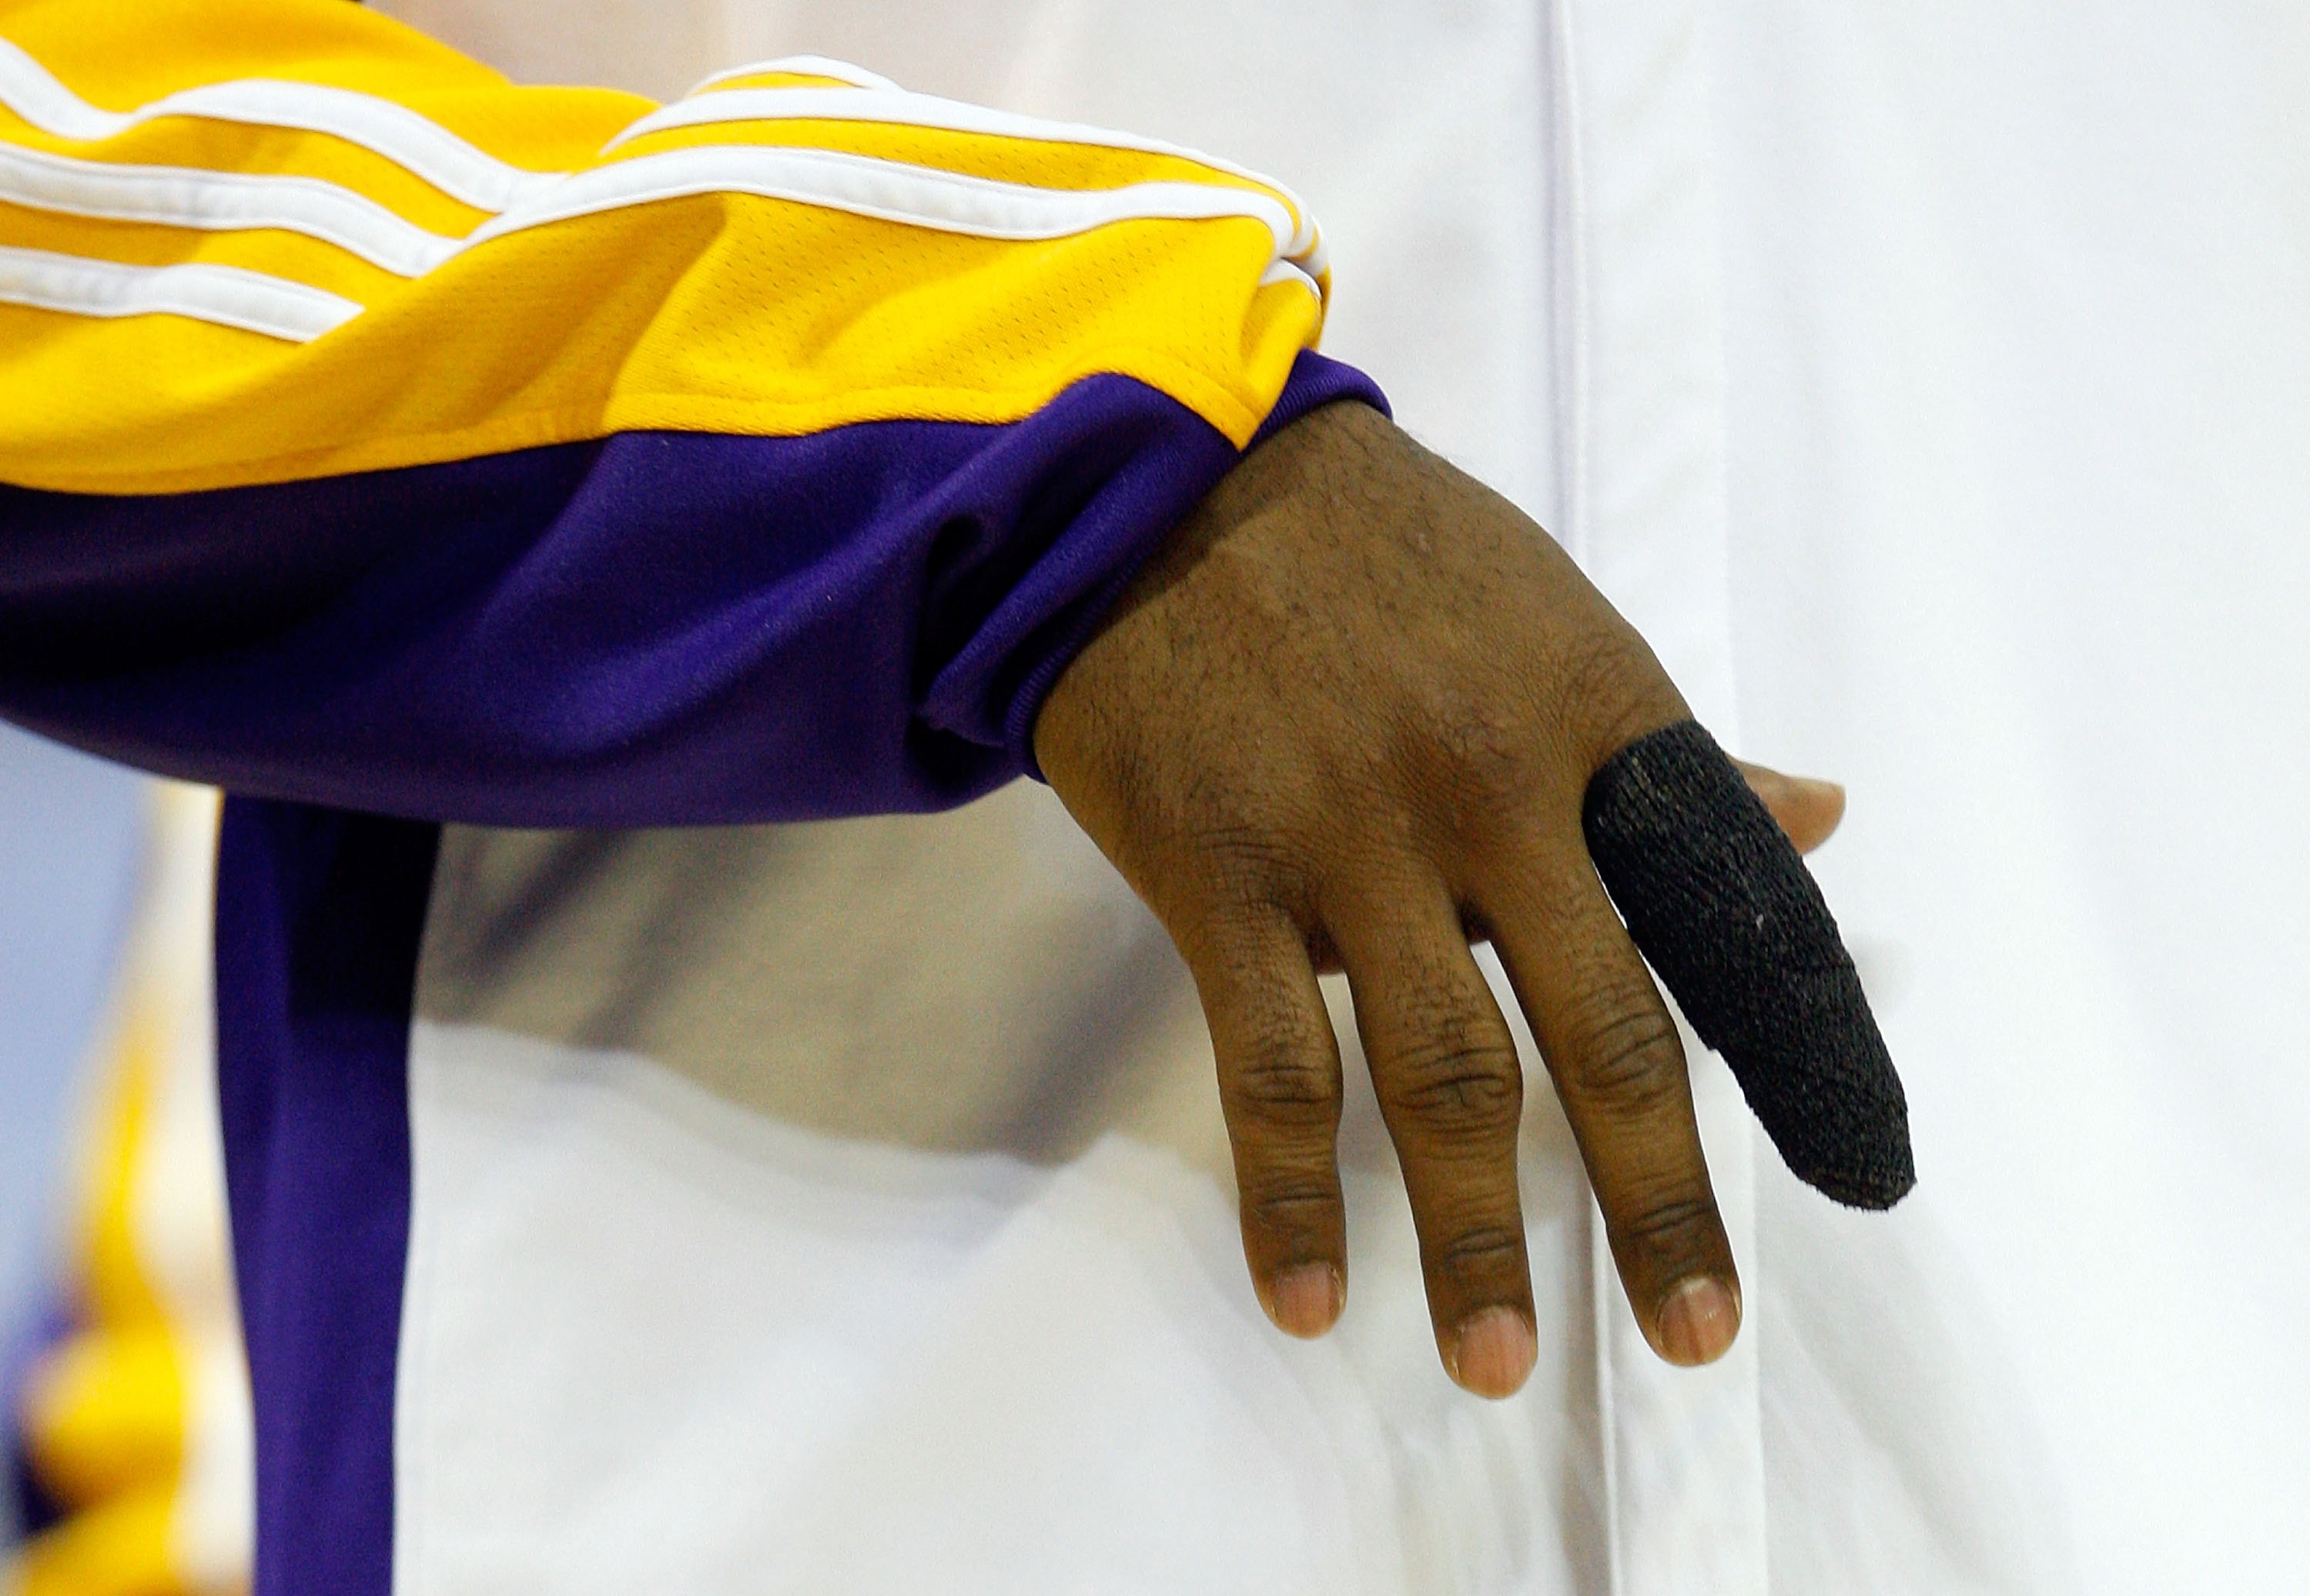 LeBron to wear finger sleeve to honor Kobe in resumed season